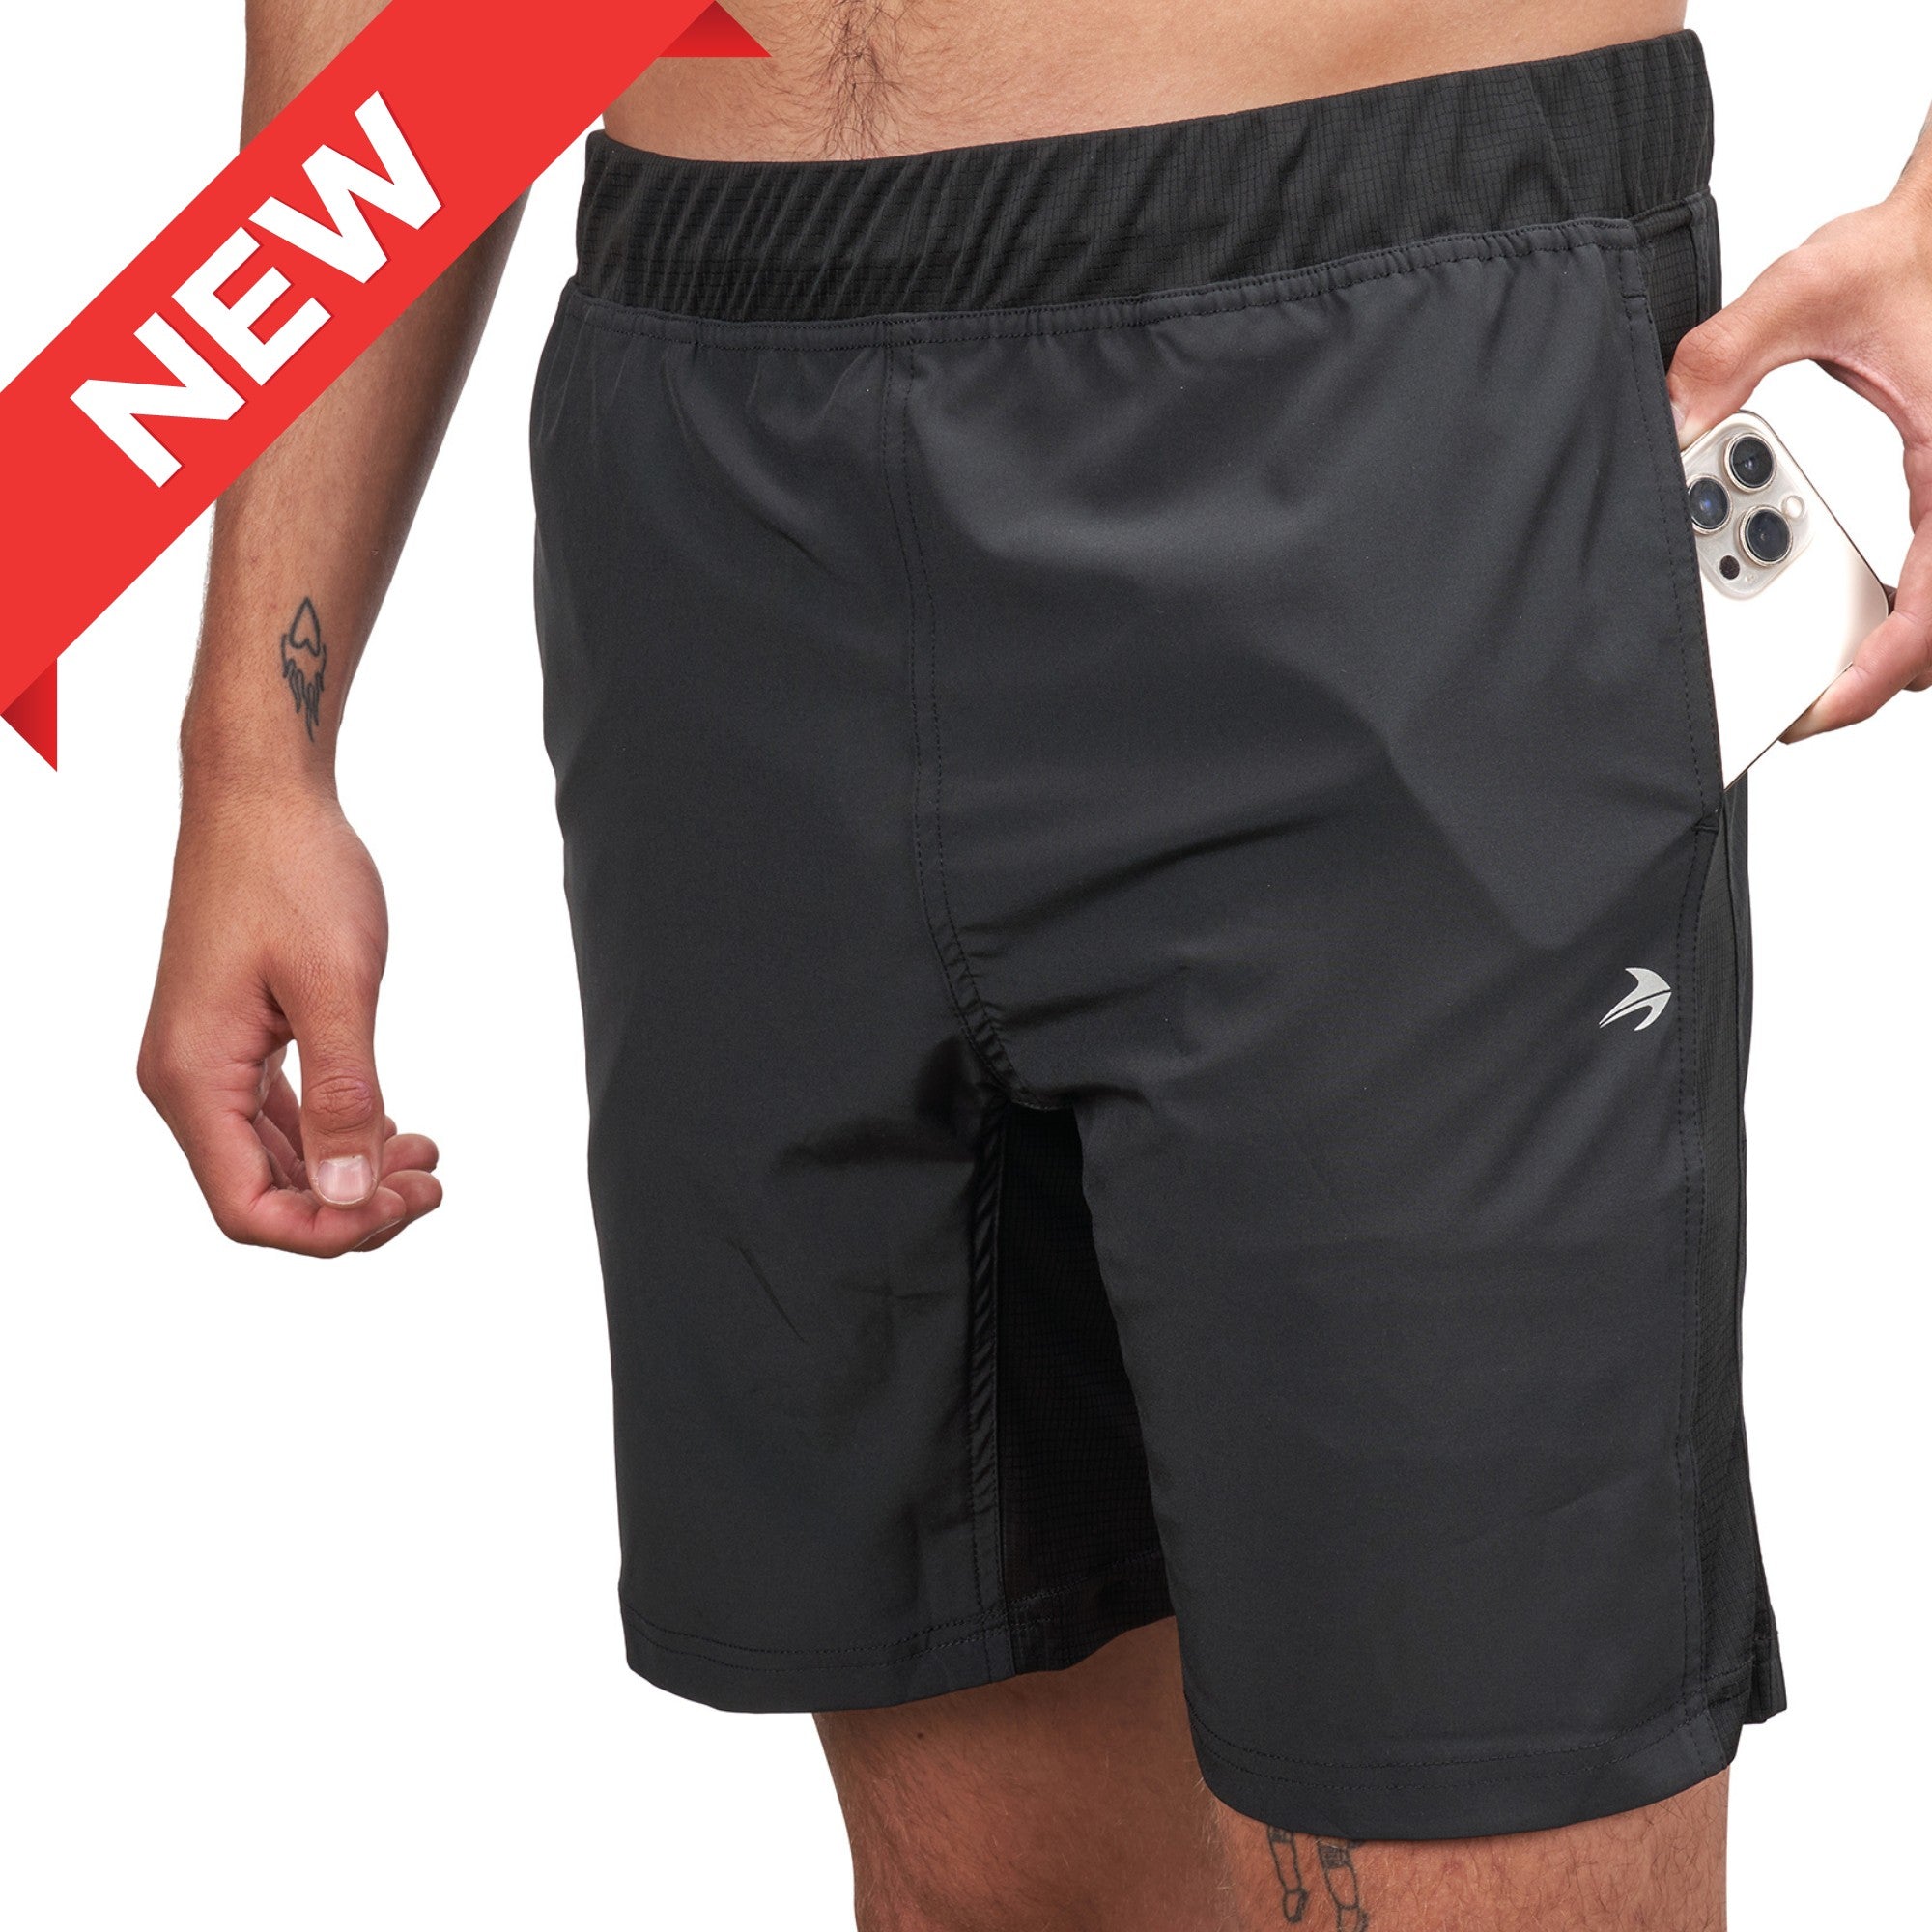 Men's 7" Linerless Gym Athletic Shorts - Black